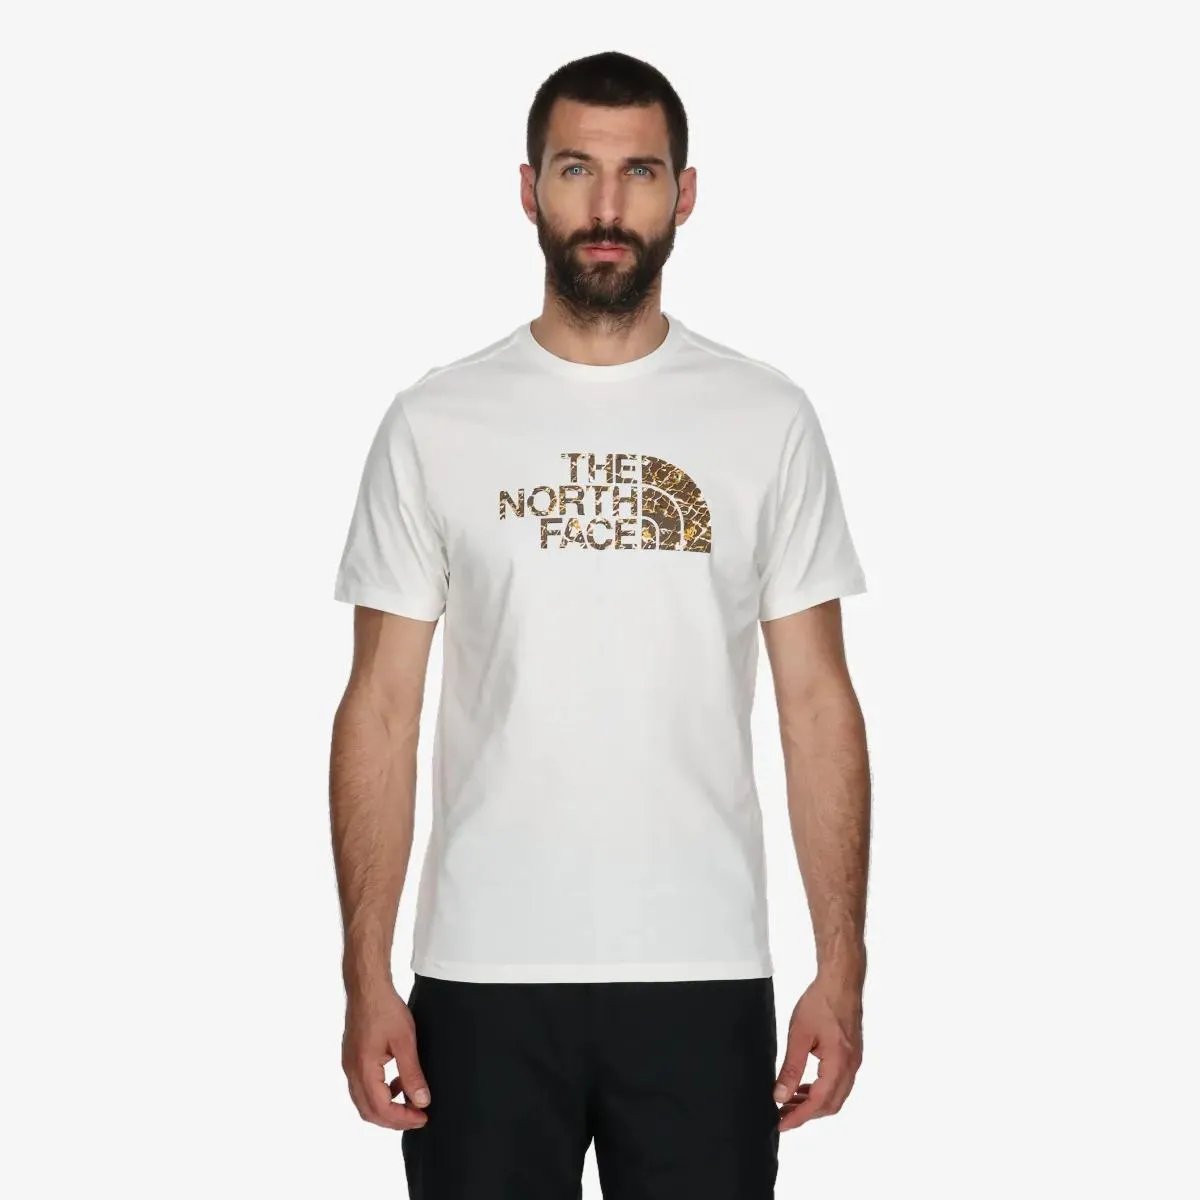 The North Face T-shirt Men’s S/S Easy Tee - Eu 